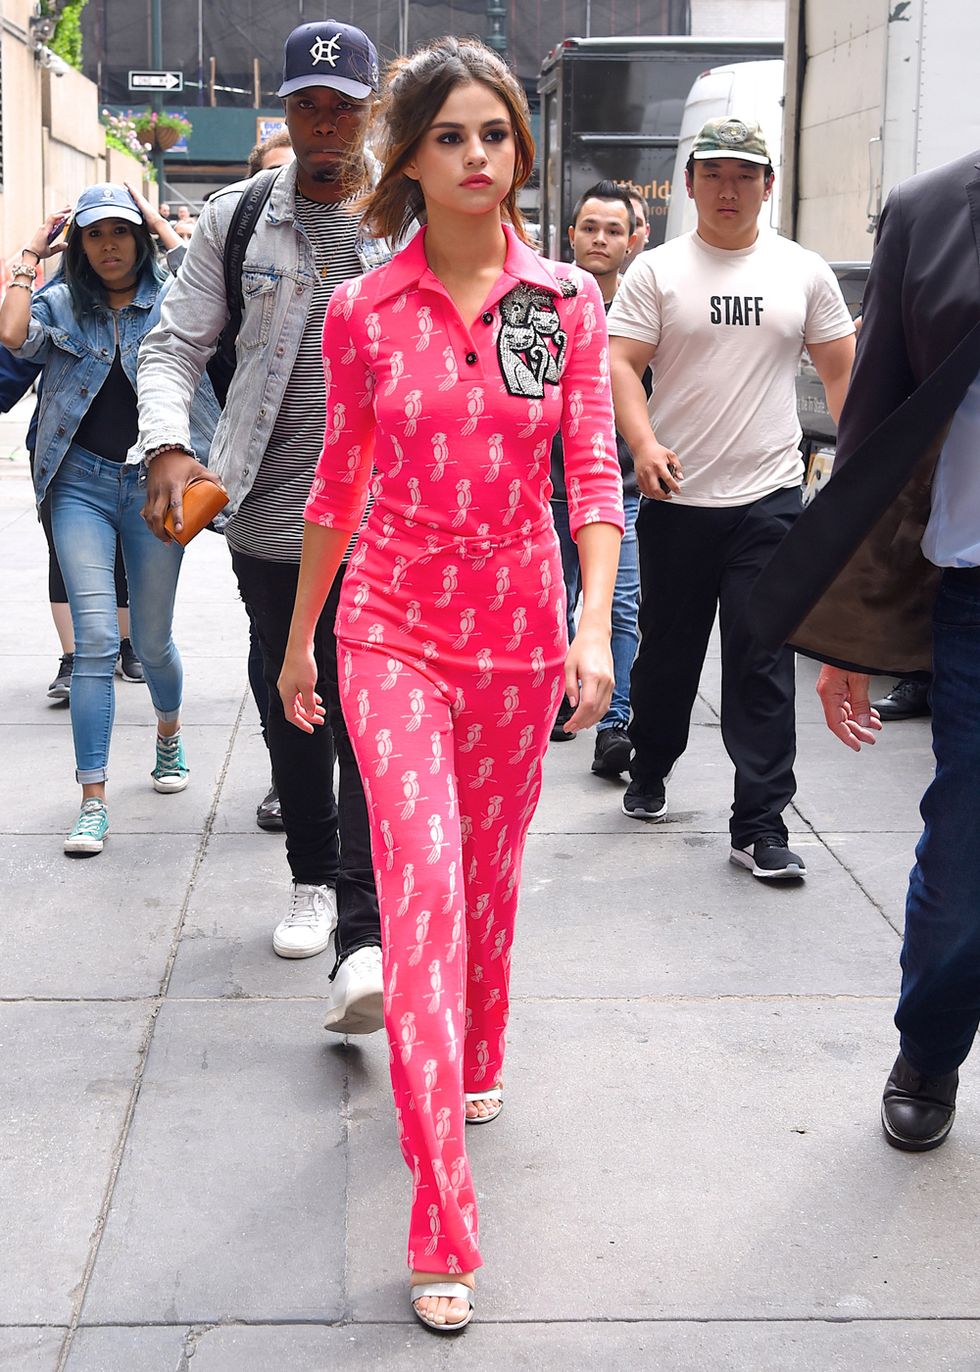 Photos of Selena Gomez's Best NYC Street Style